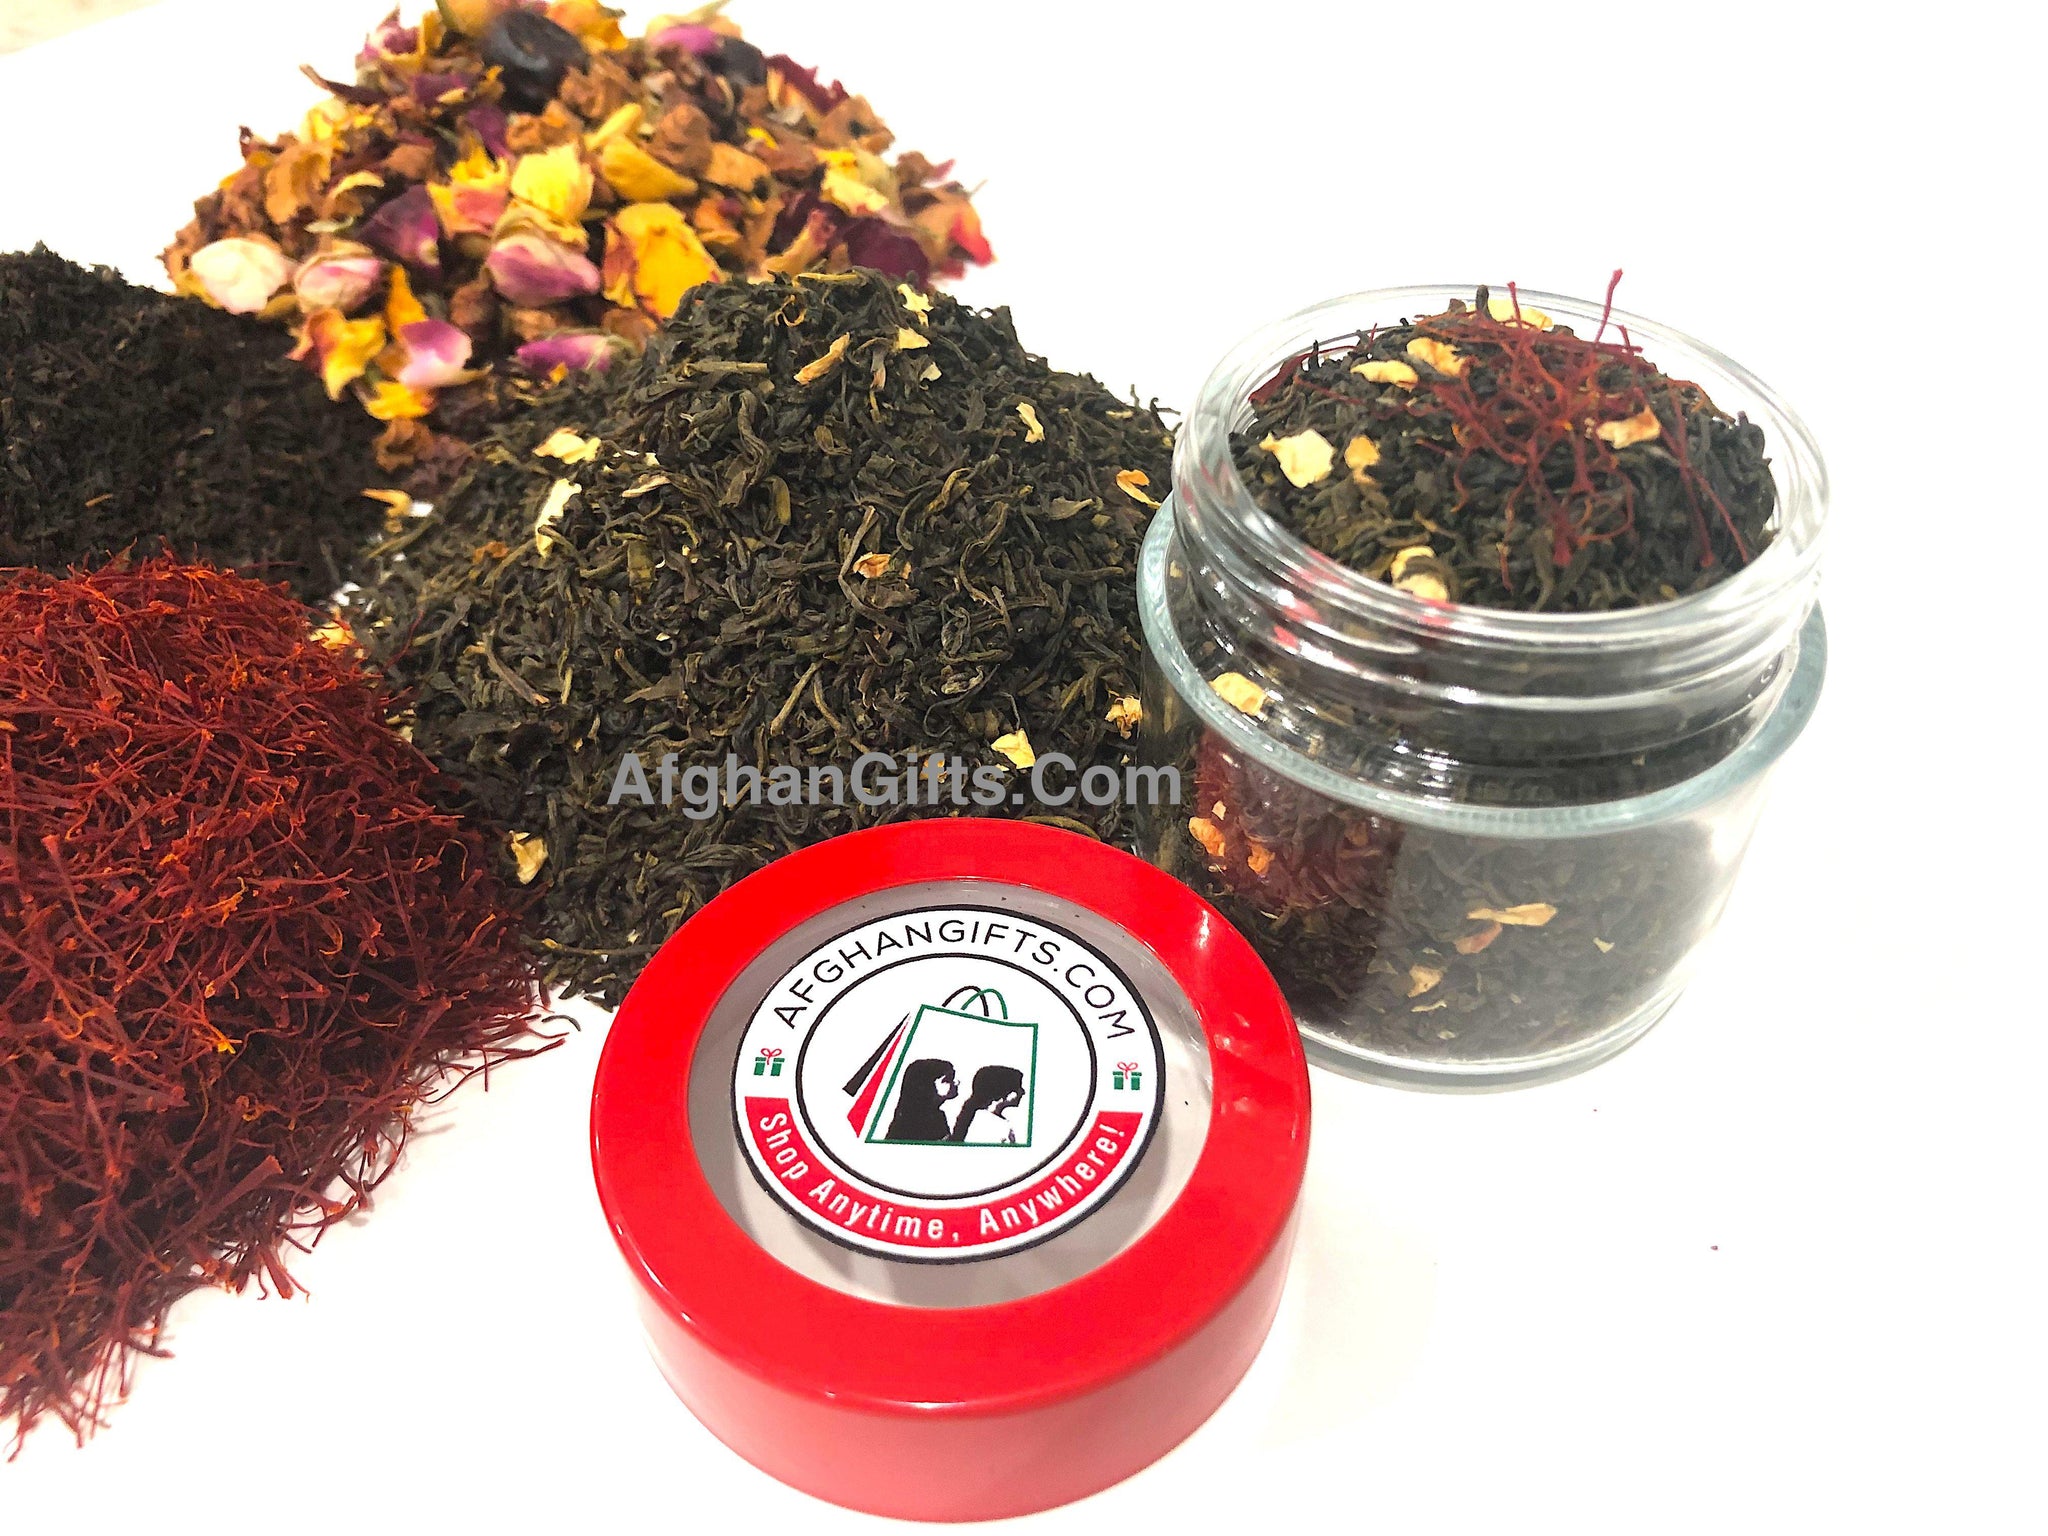 Gift Pack 1 - Afghan Saffron & Tea Collection - Afghan Gifts Shop